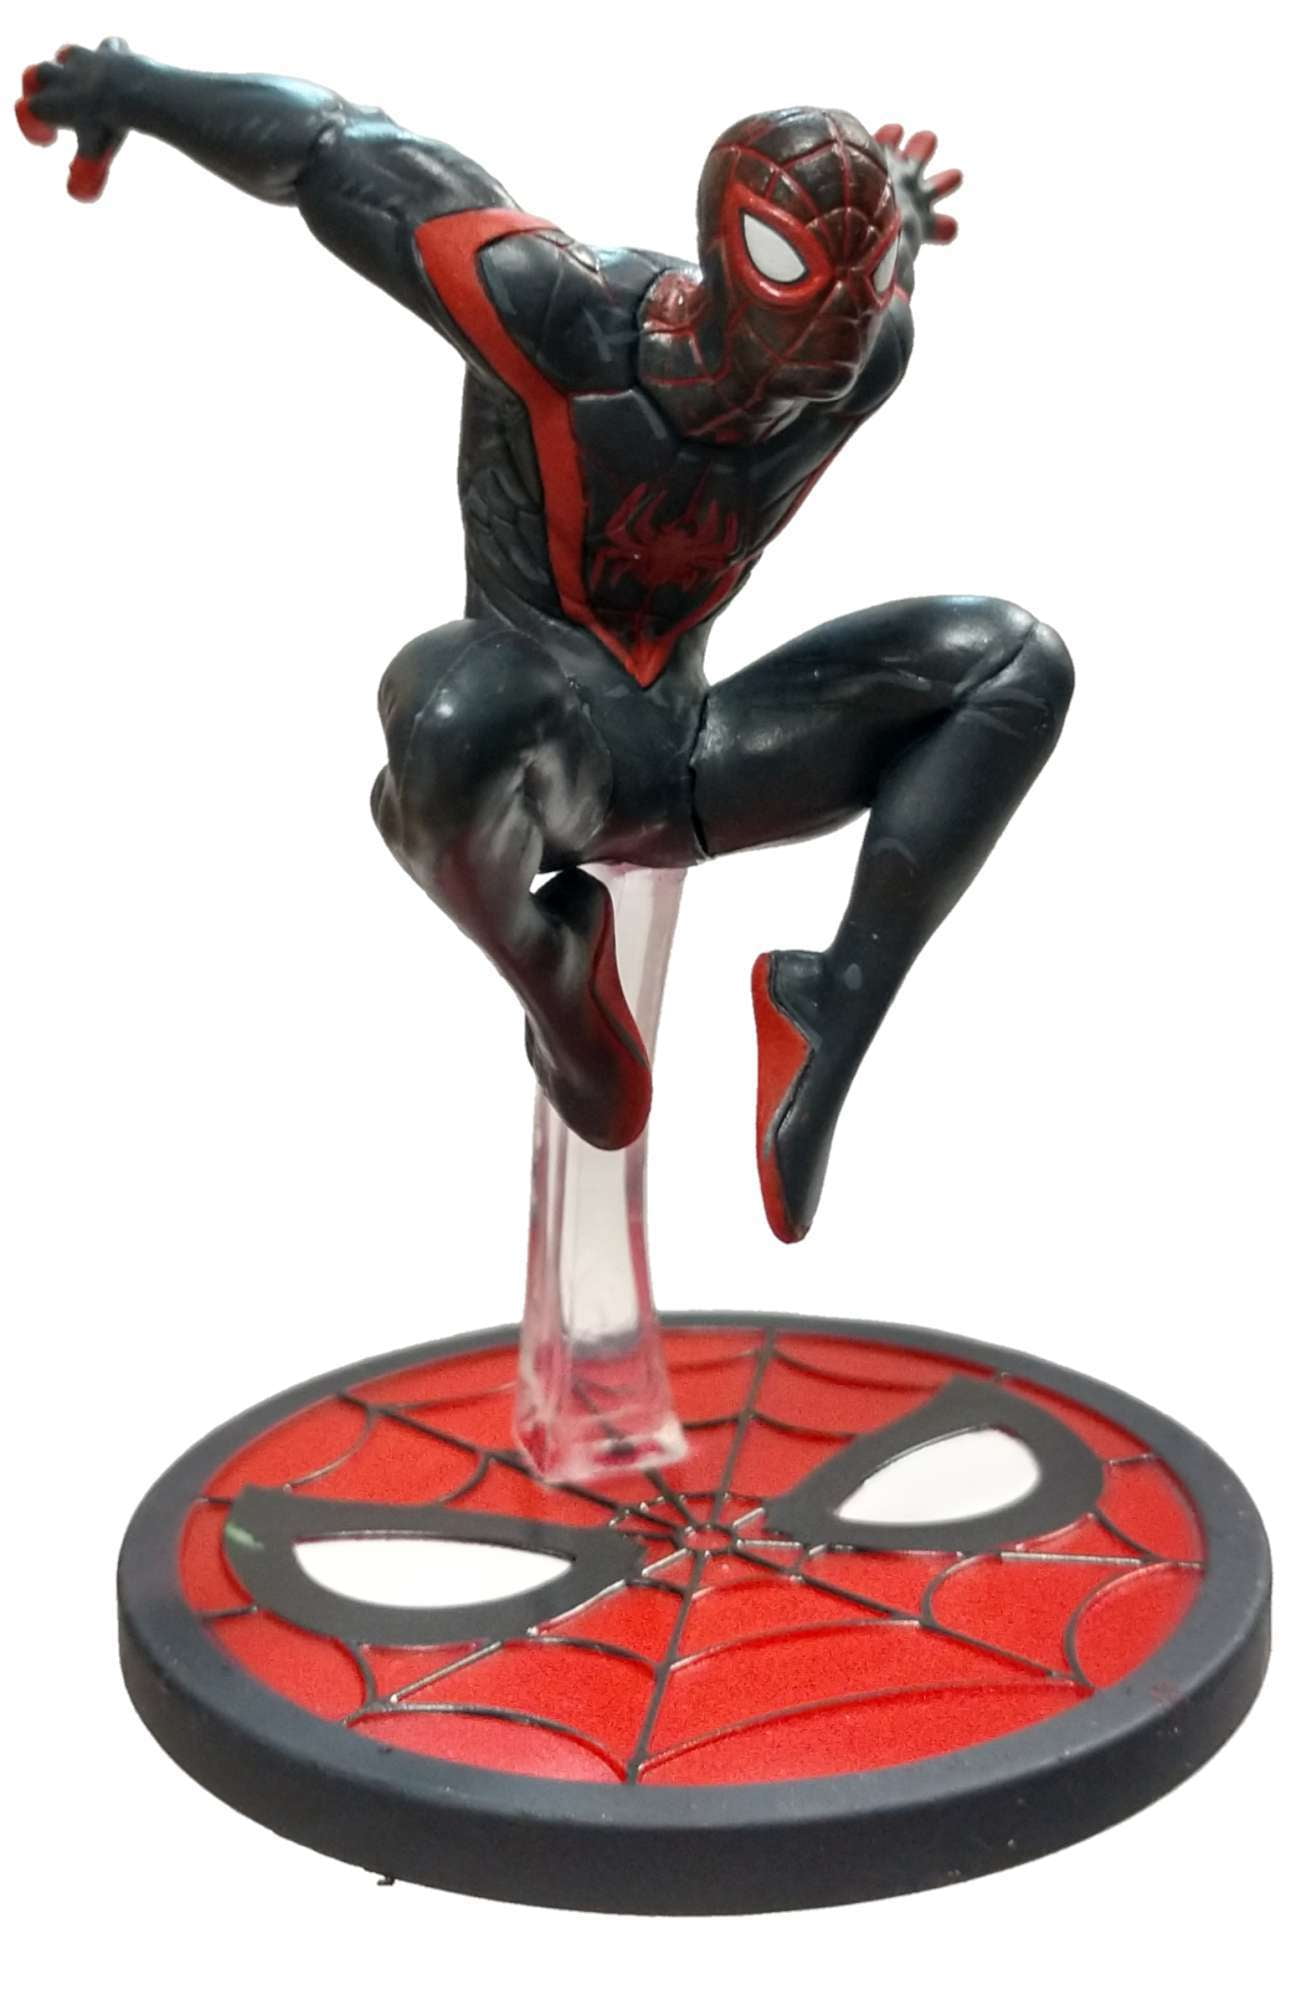 Figurine en carton Spiderman Miles Morales – Marvel Avengers - Haut 178 cm